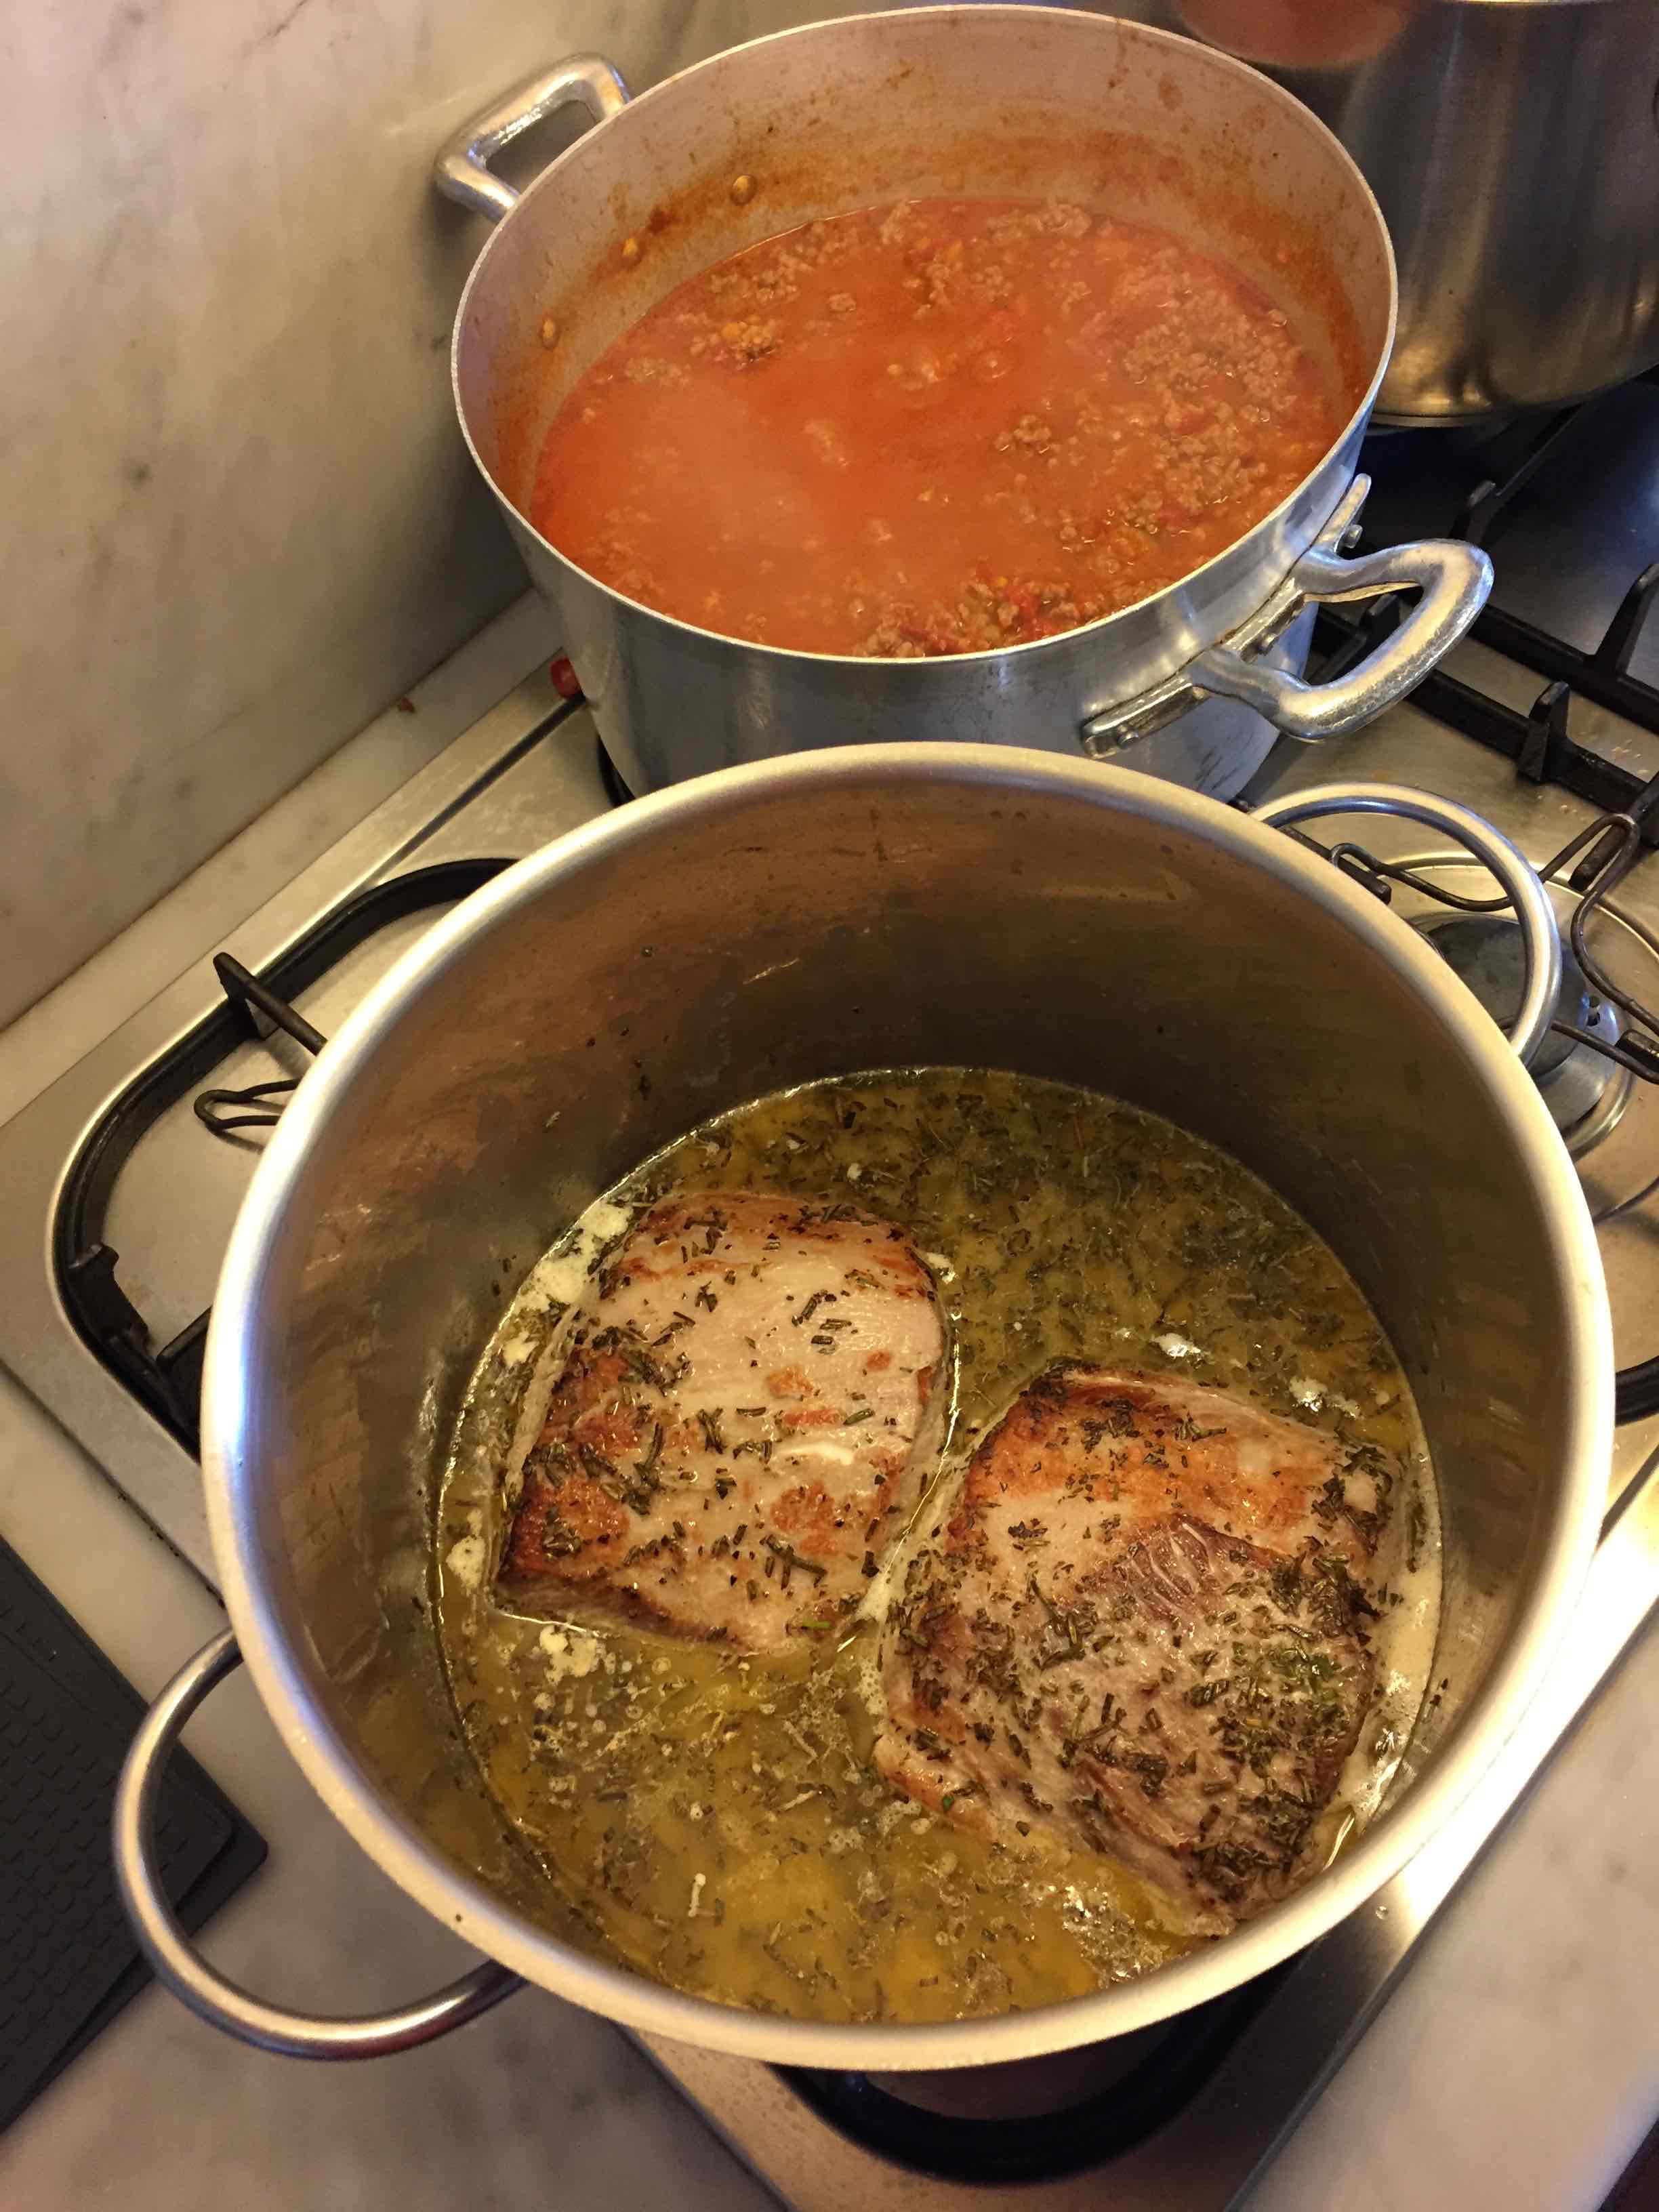 arista pork tuscan style cooking class